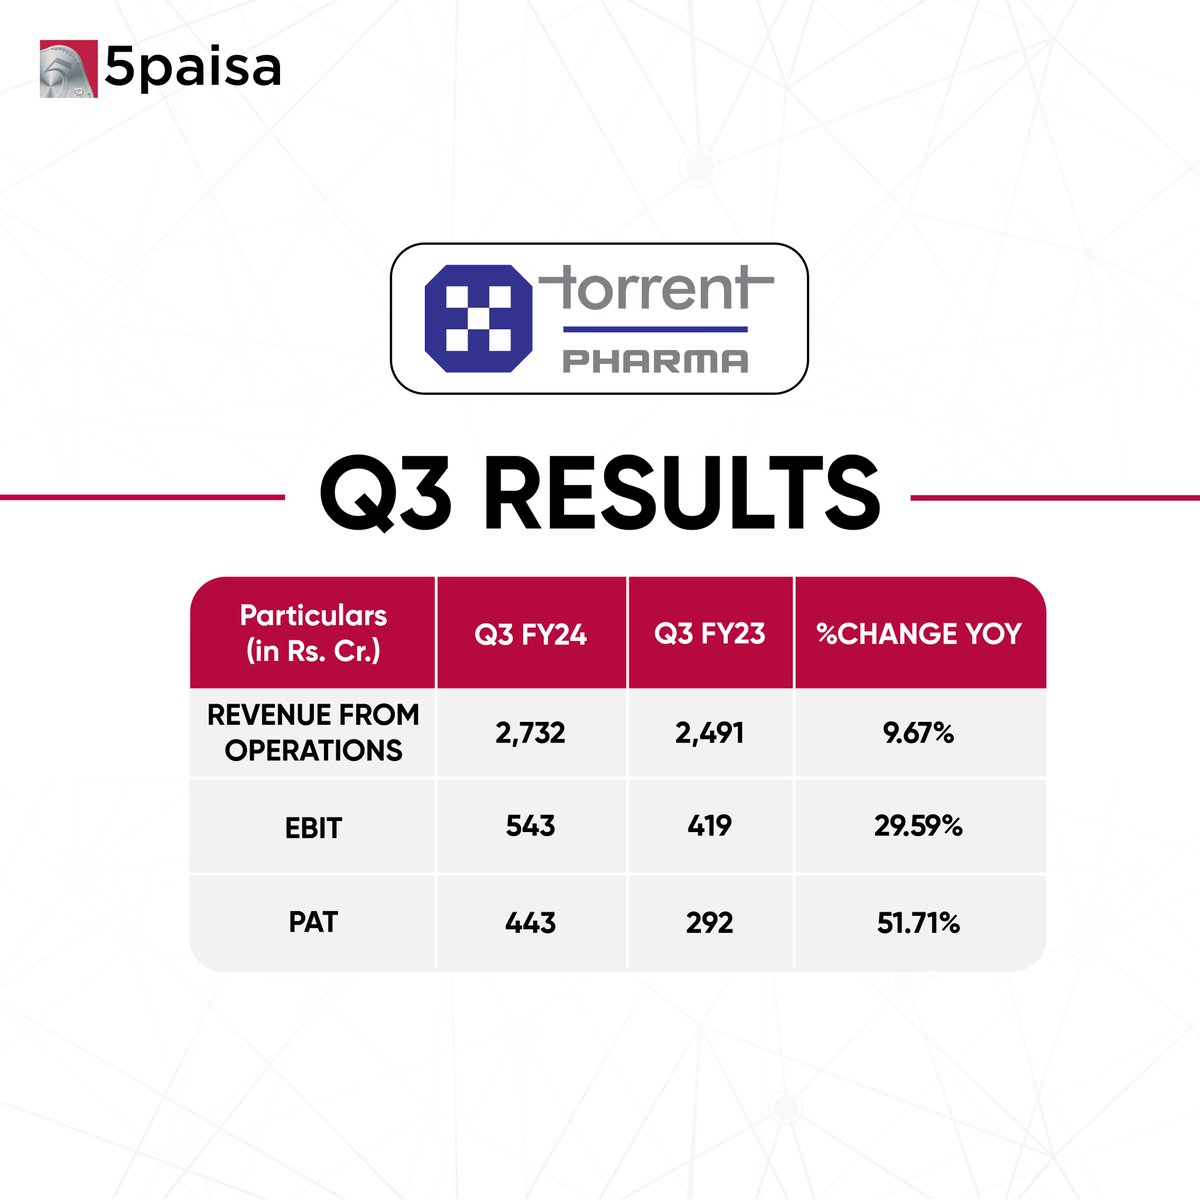 Torrent Pharma - Q3 Result Update 

#TorrentPharma #Q3results